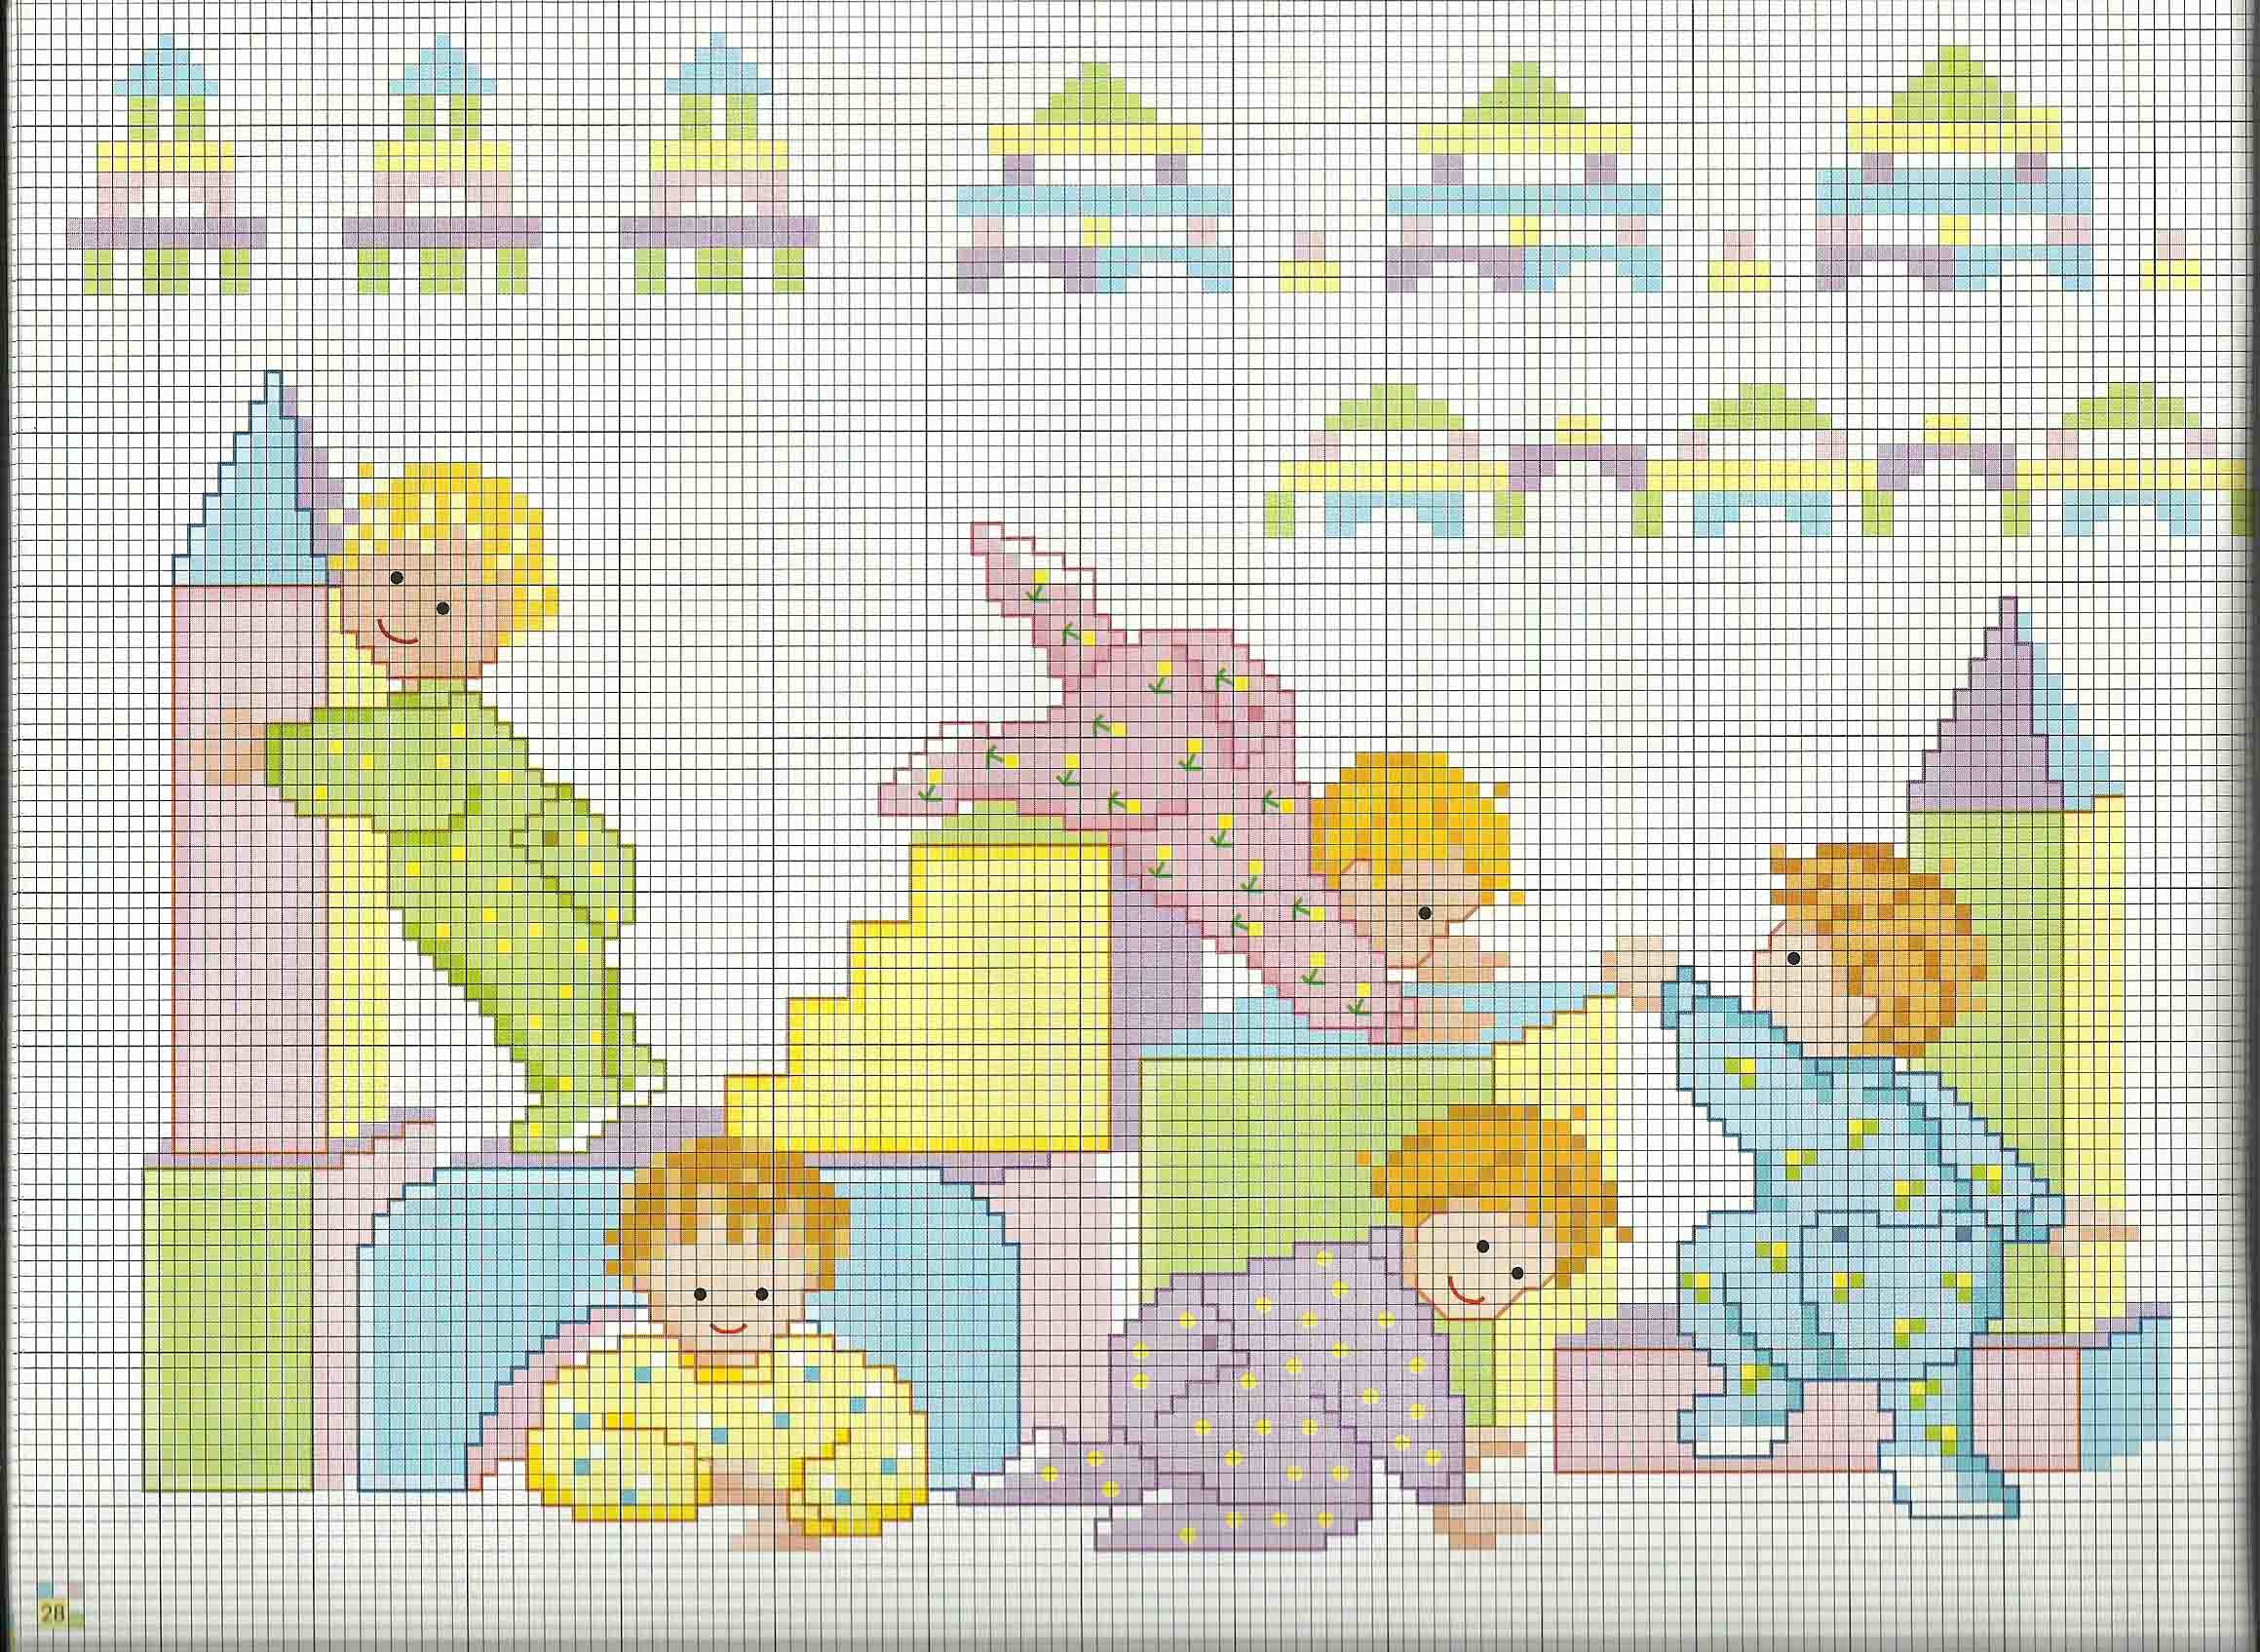 Cross stitch baby patterns baby blanket children playing